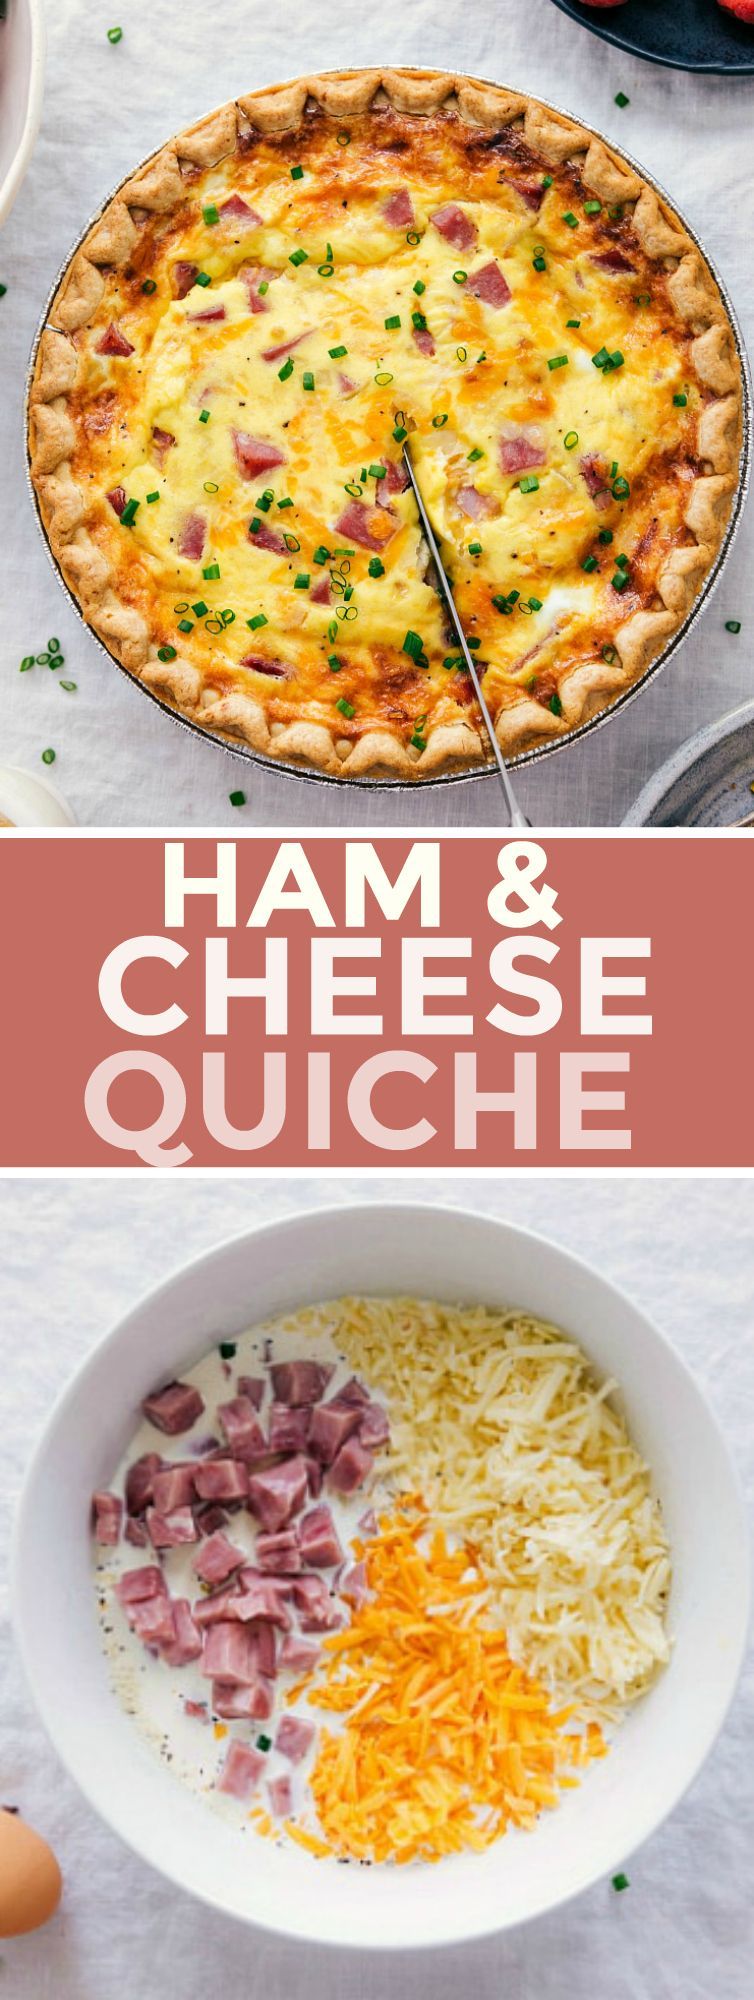 Ham & Cheese Quiche -   18 healthy recipes Simple brunch food ideas